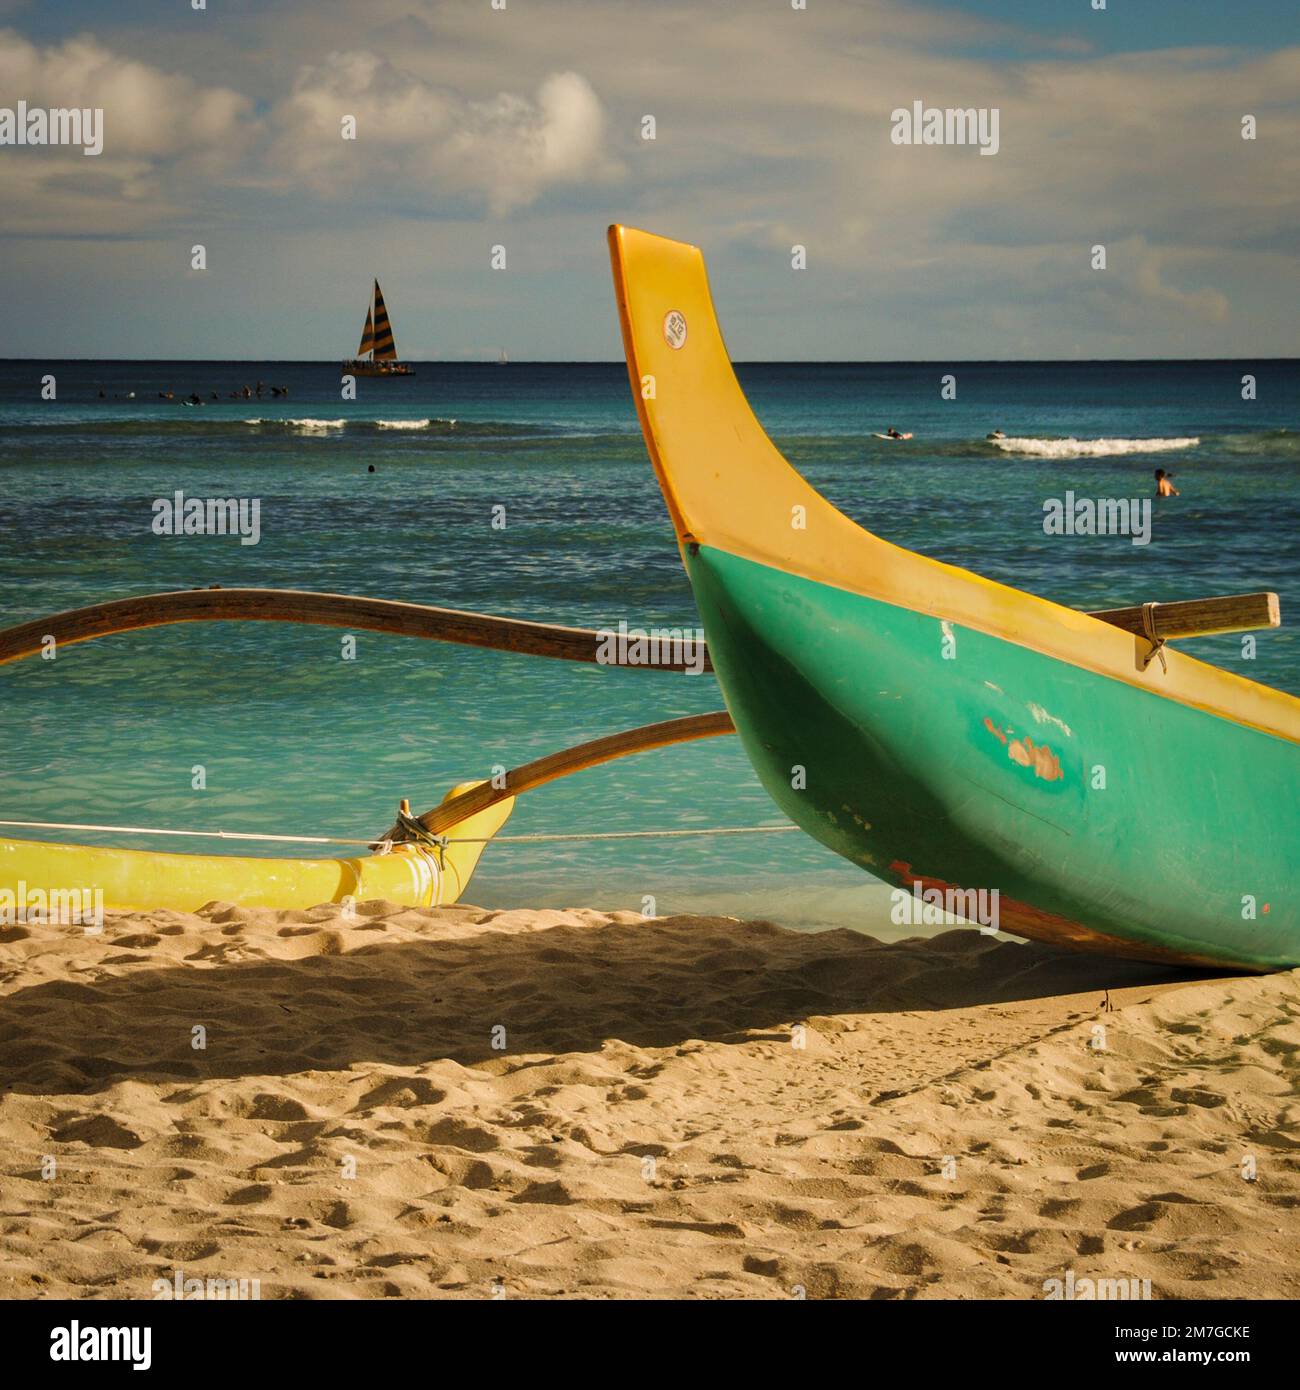 An outrigger canoe in the sand at Waikiki Beach, Oahu, Hawaii Stock Photo